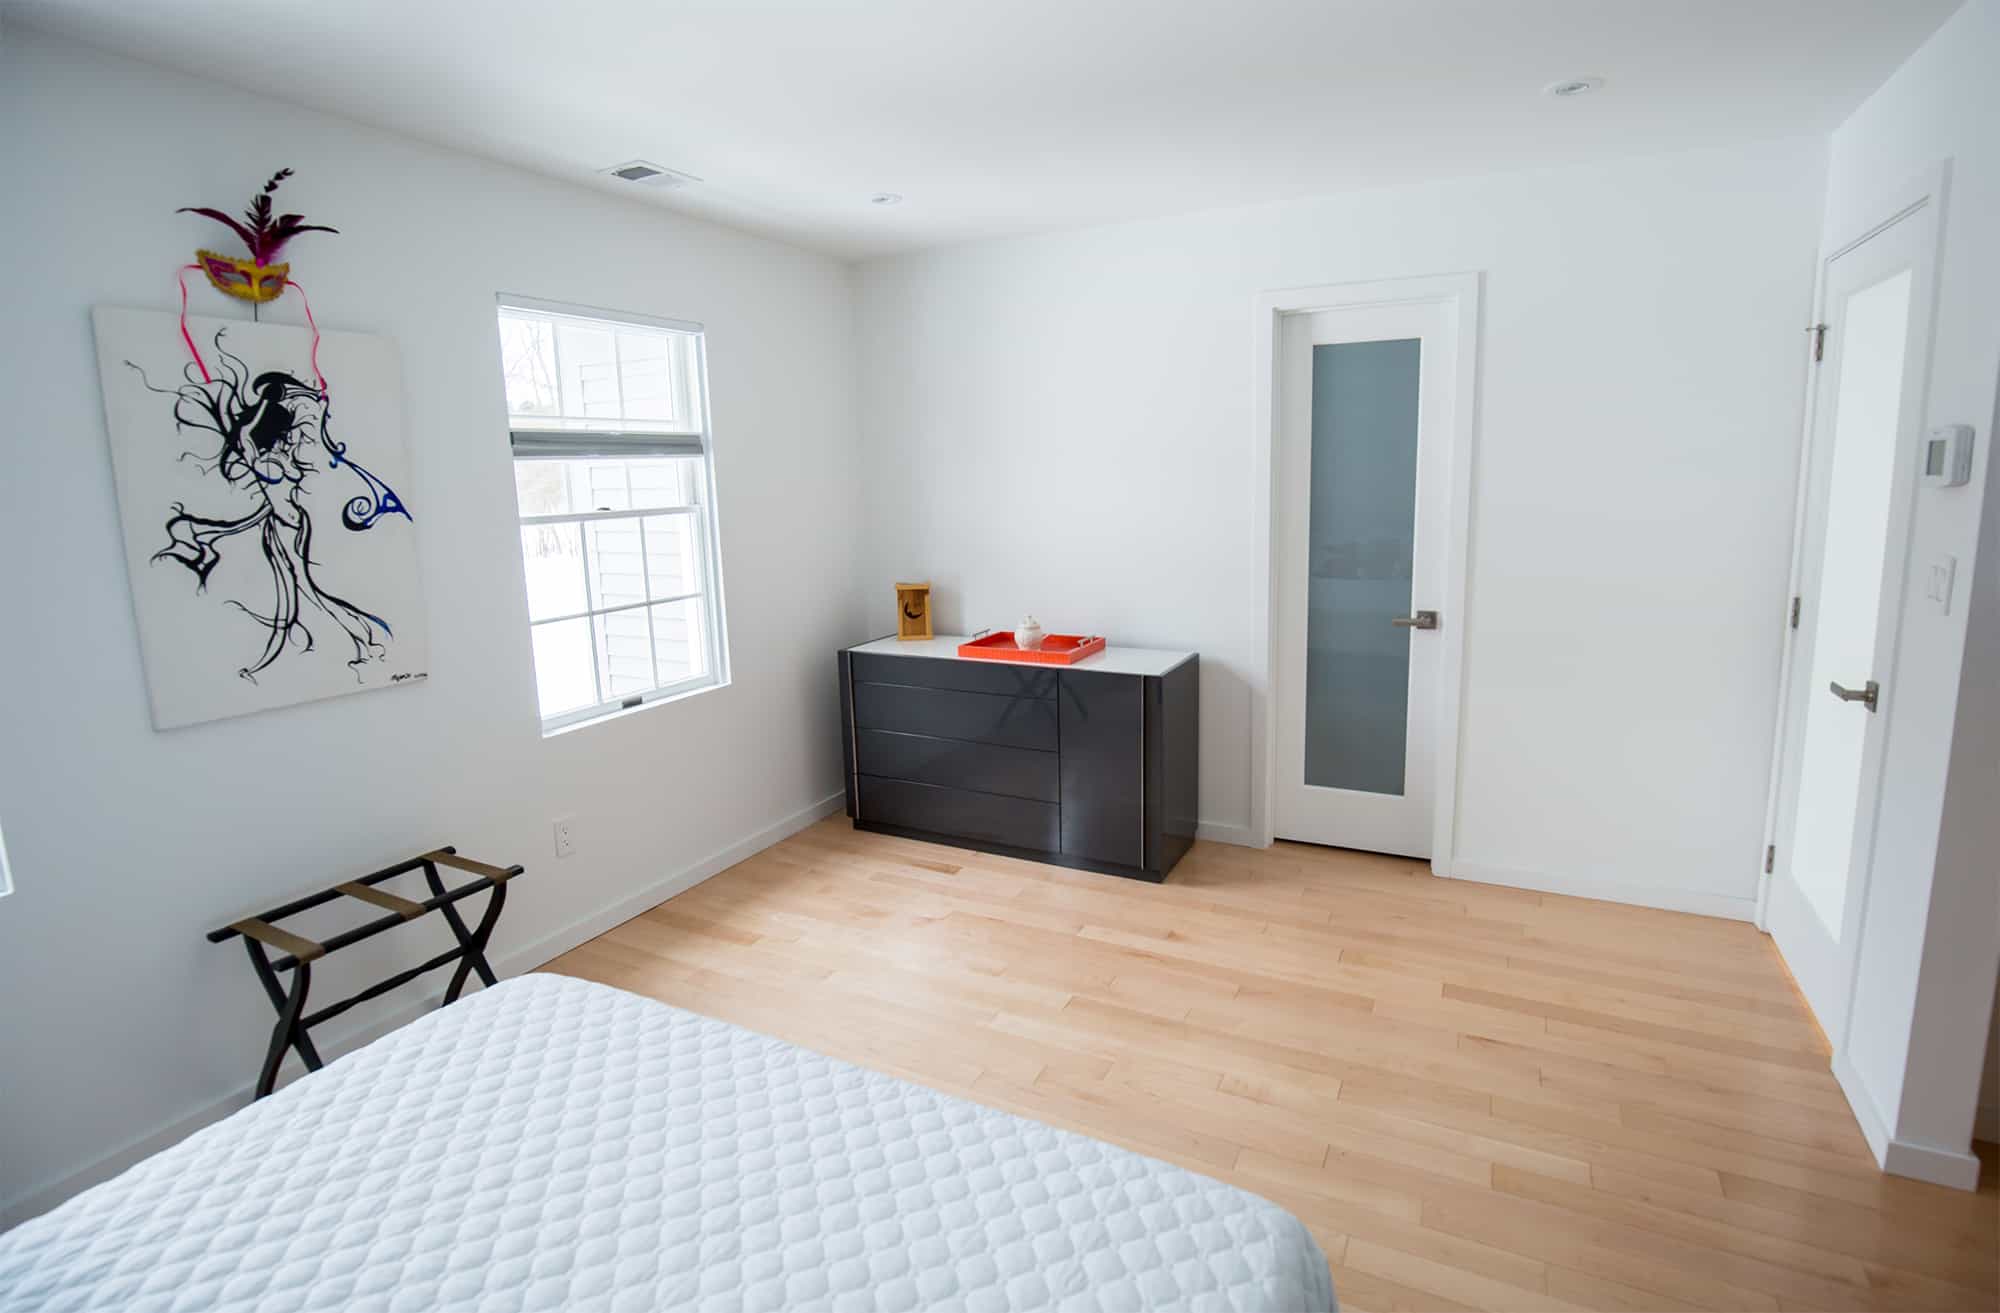 Completed Guest Bedroom Remodel in Voorheesville, NY